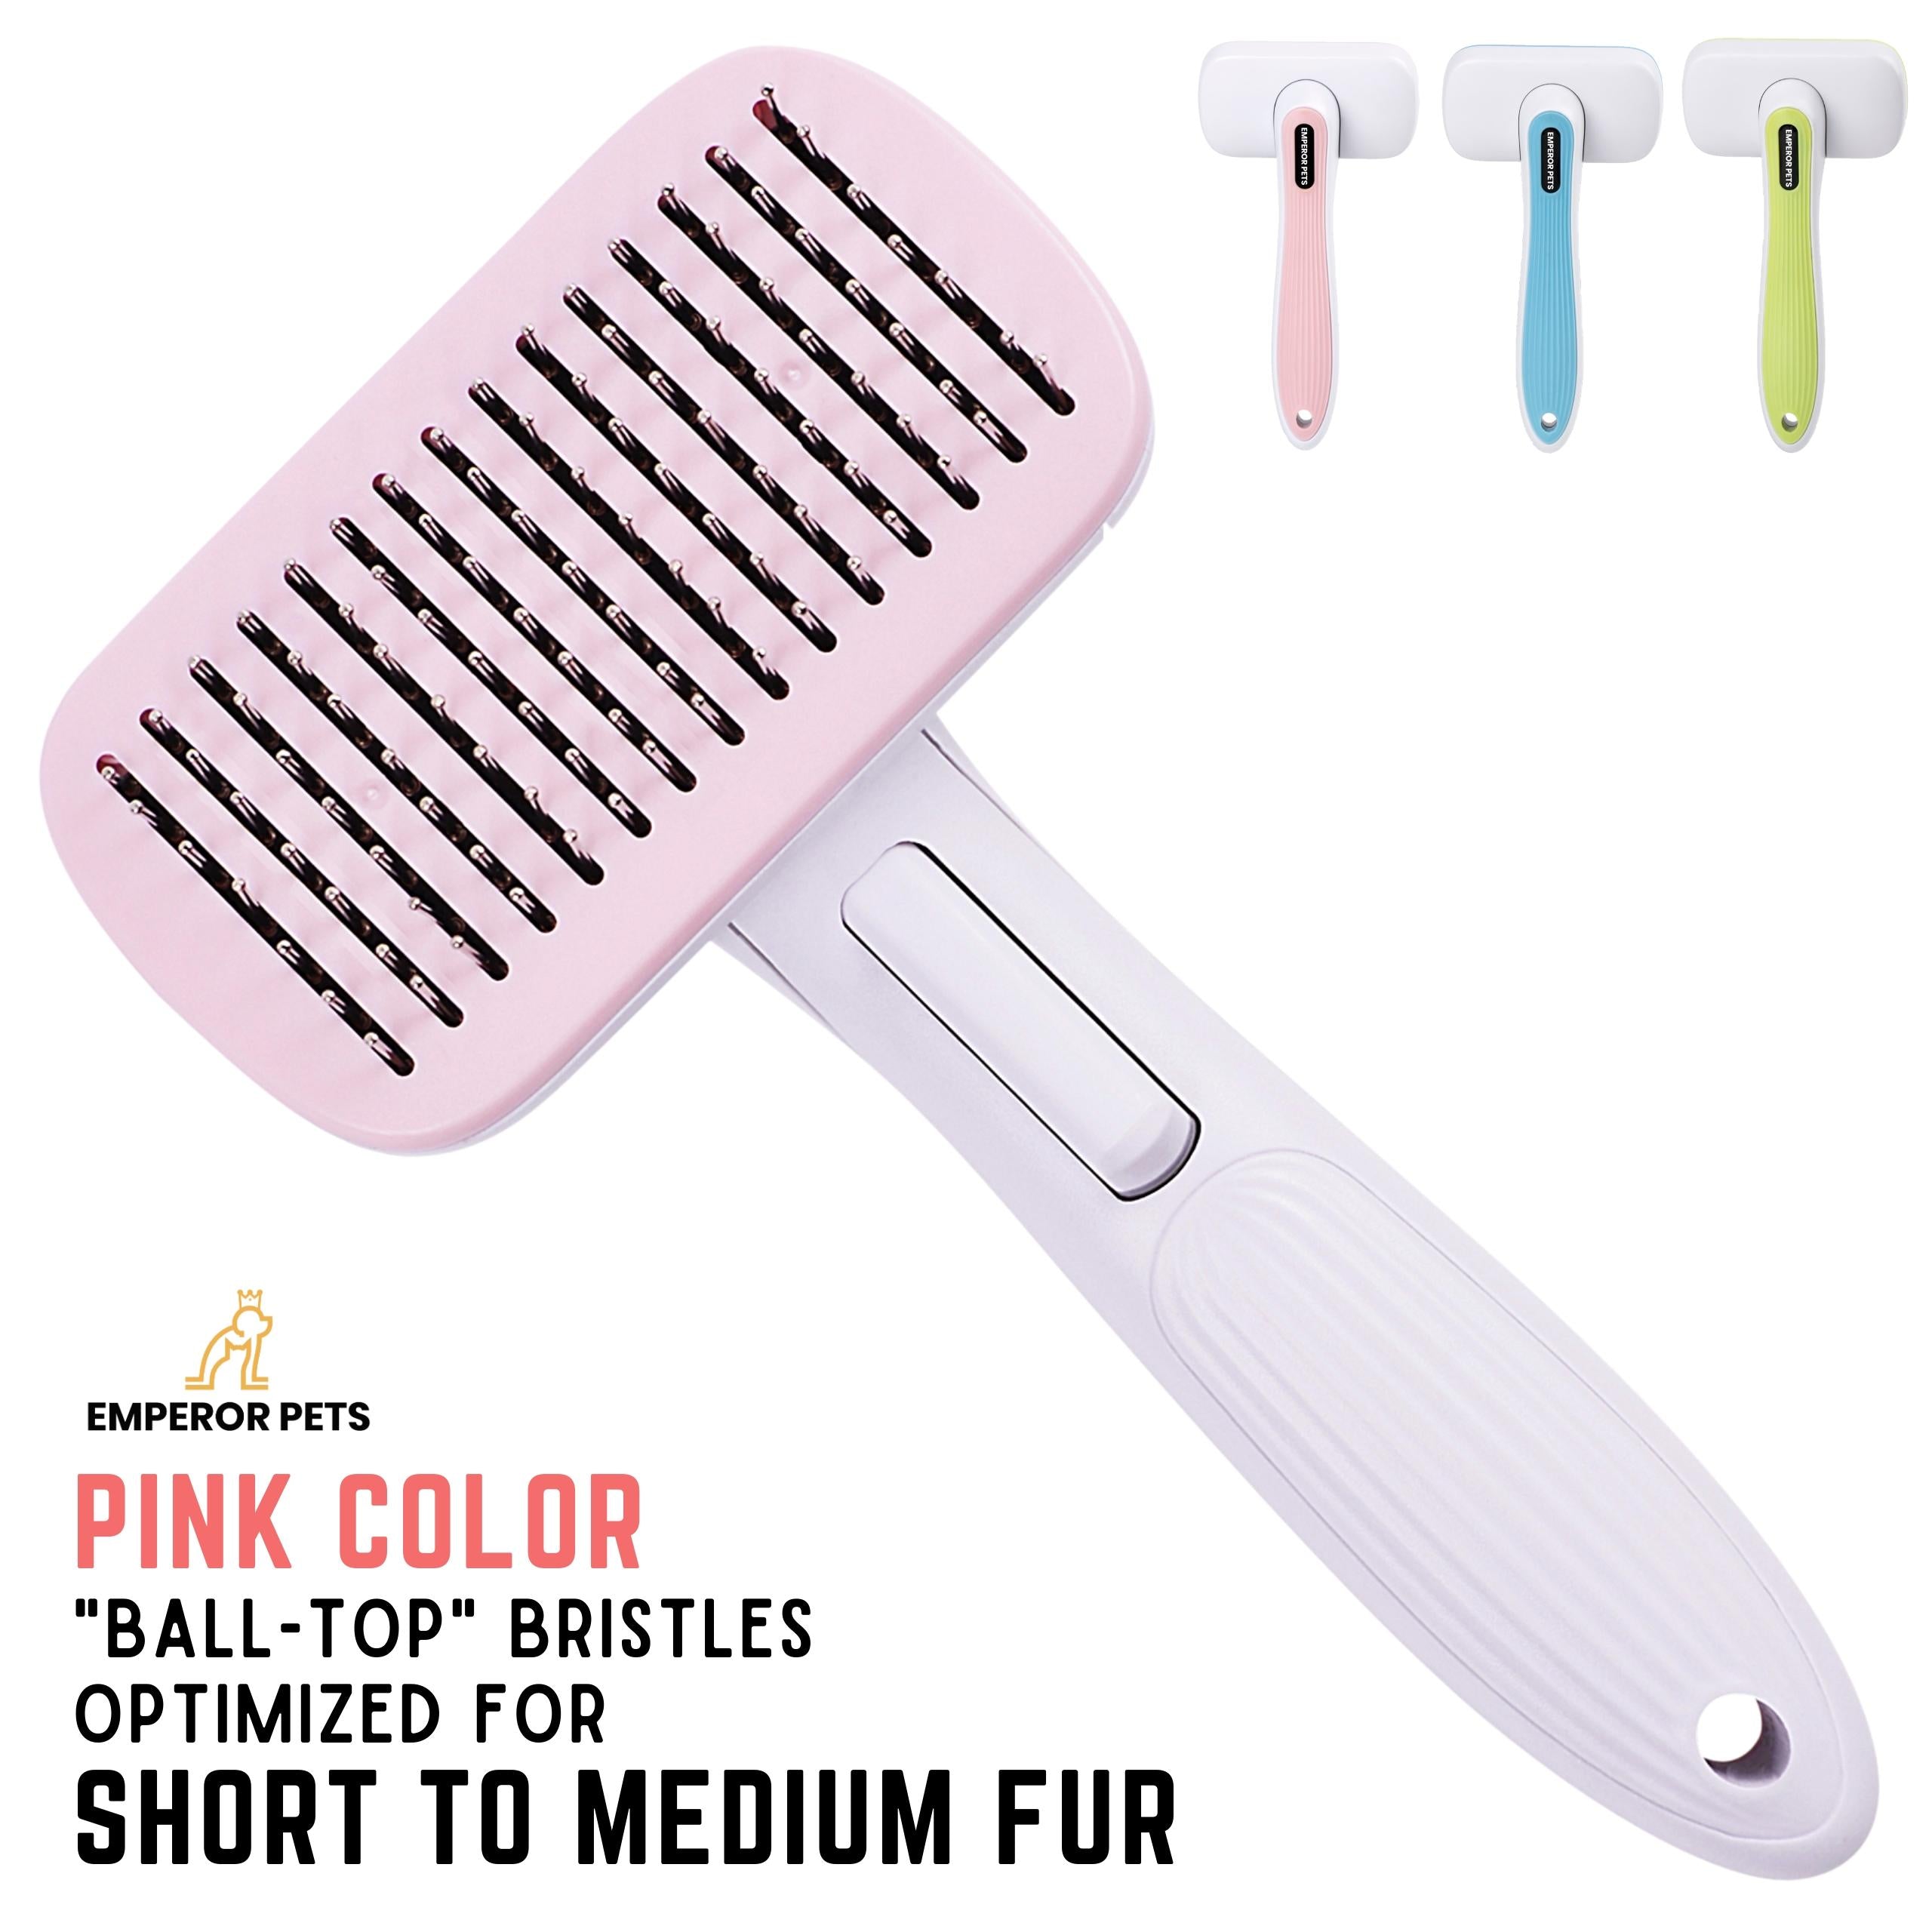 Emperor Pets Self Cleaning Pet Fur Slicker Brush for Short Fur Pets, Dog Brush, Cat Brush, Pink Color - Image 1 Main